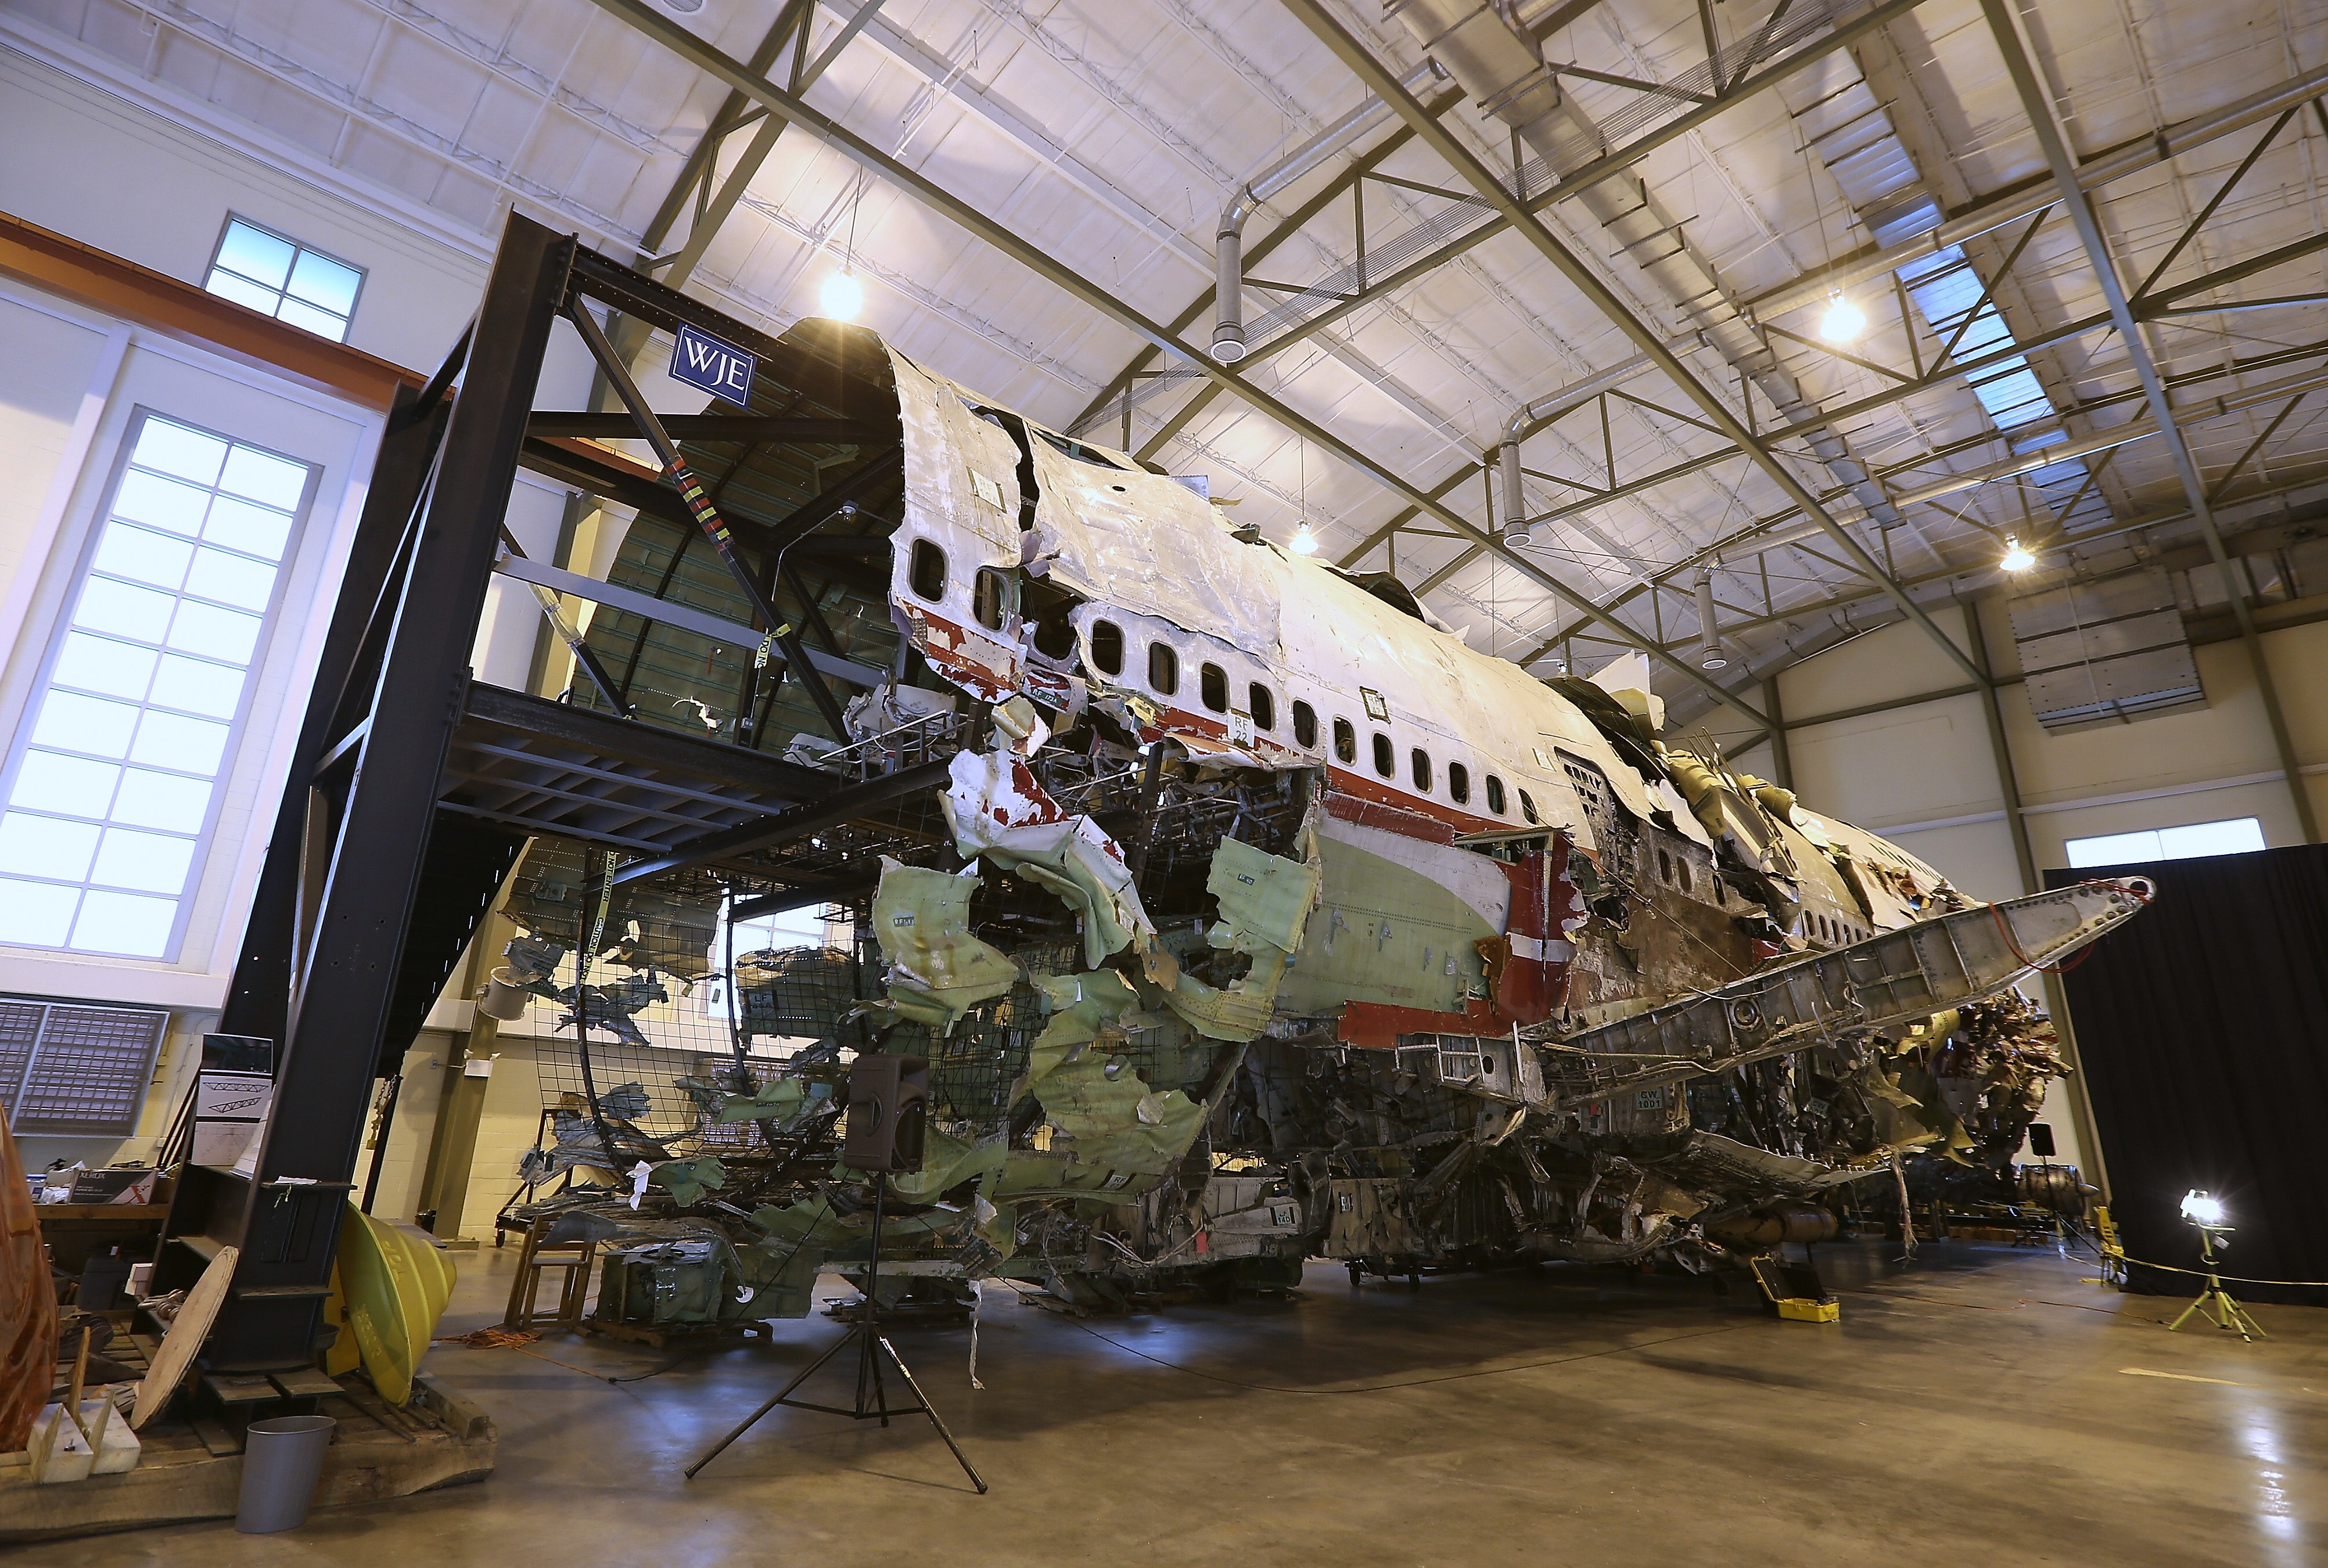 TWA Flight 800 crash: Inside look at plane's wreckage